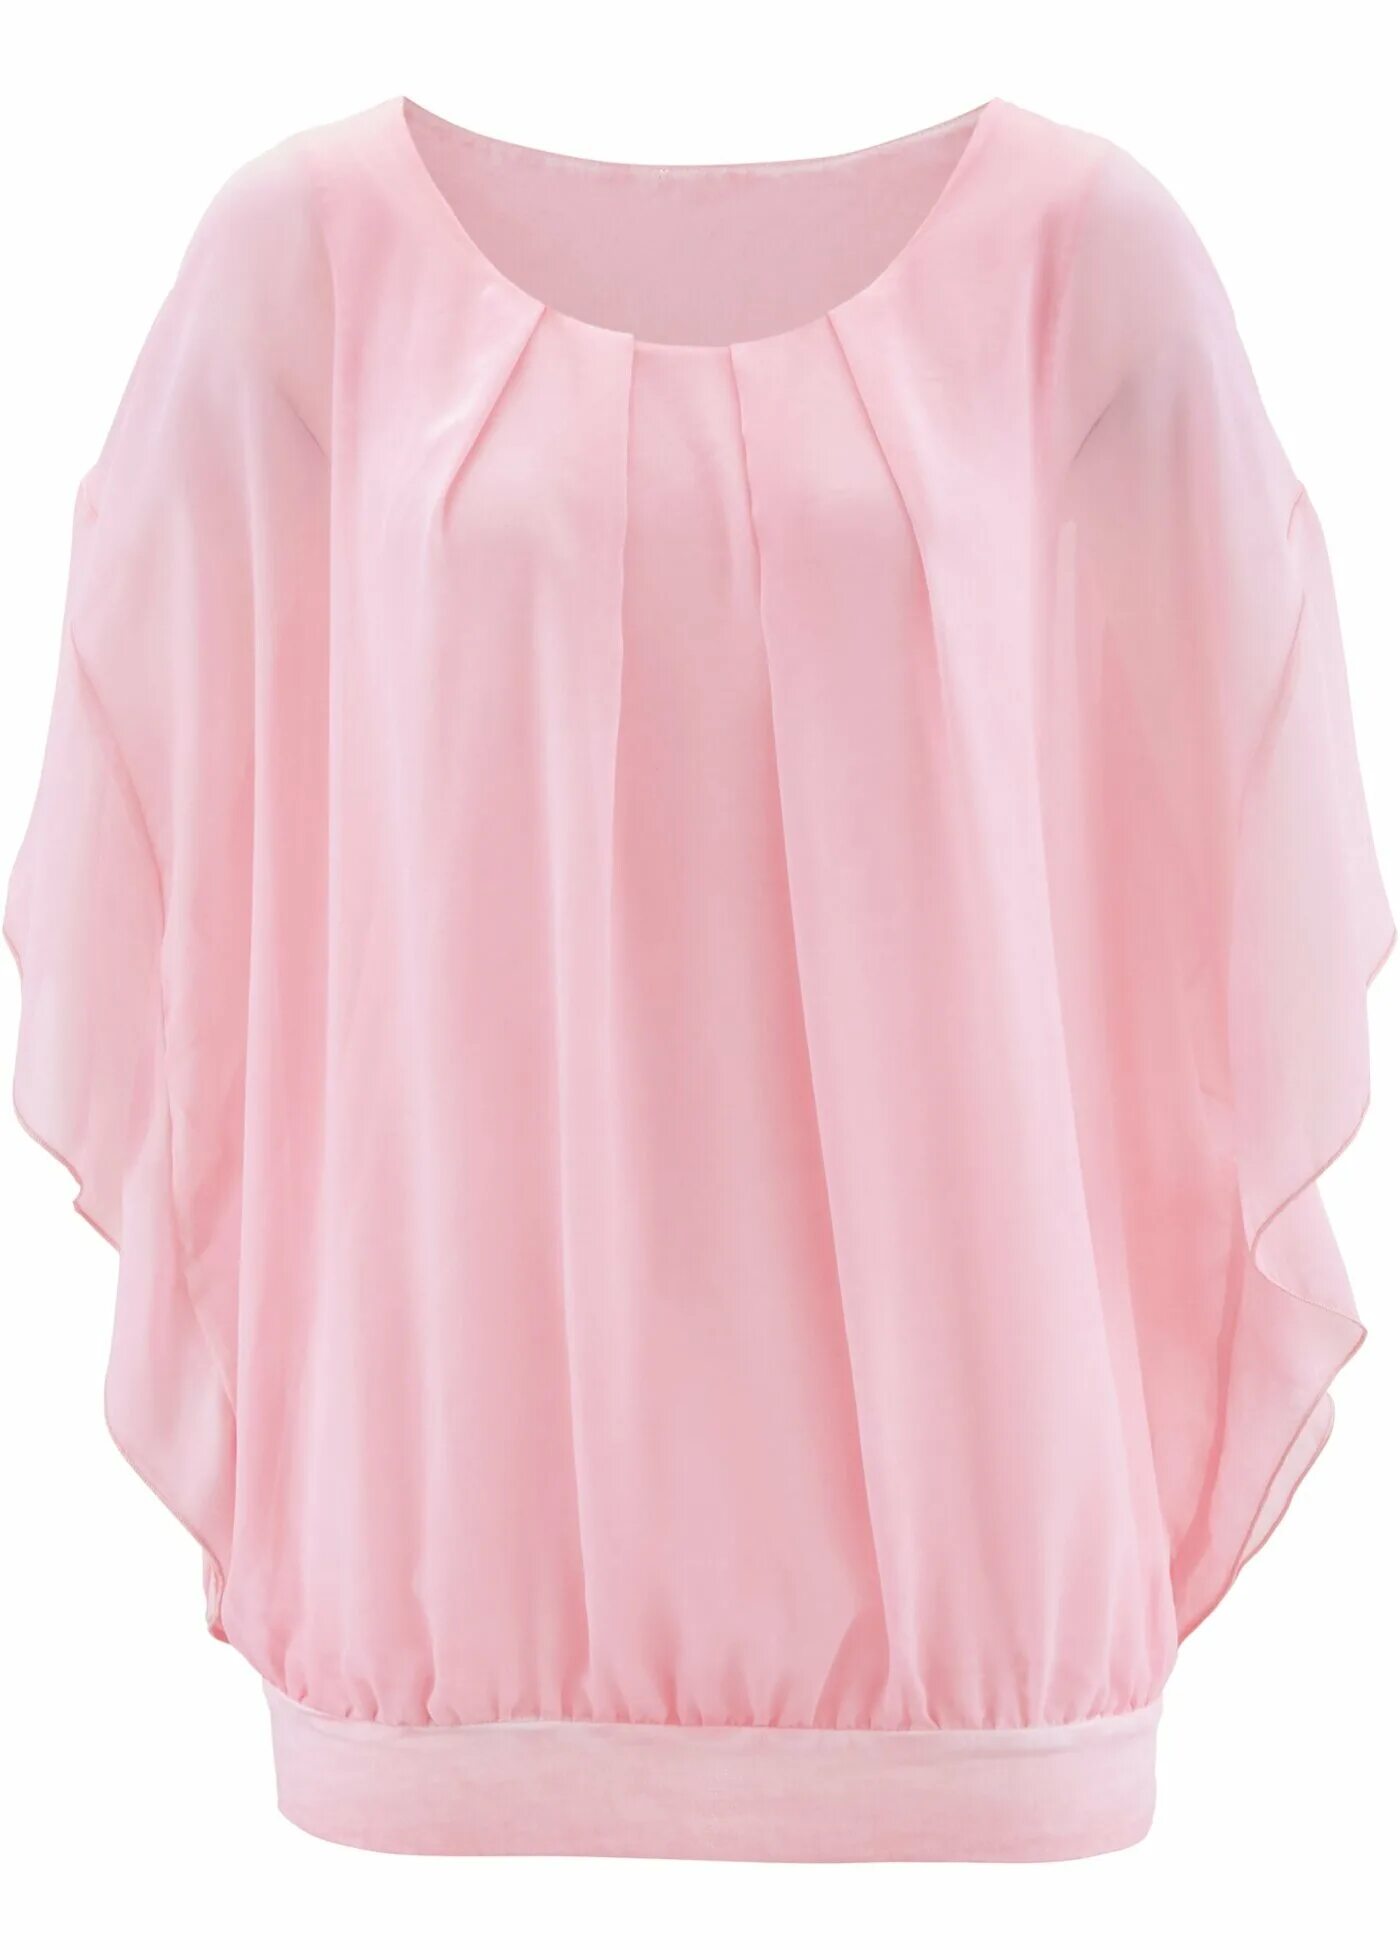 Женские блузки розовые. Розовая блузка. Розовая шифоновая блузка. Розовая блузка женская. Розовая шифоновая Боуза.